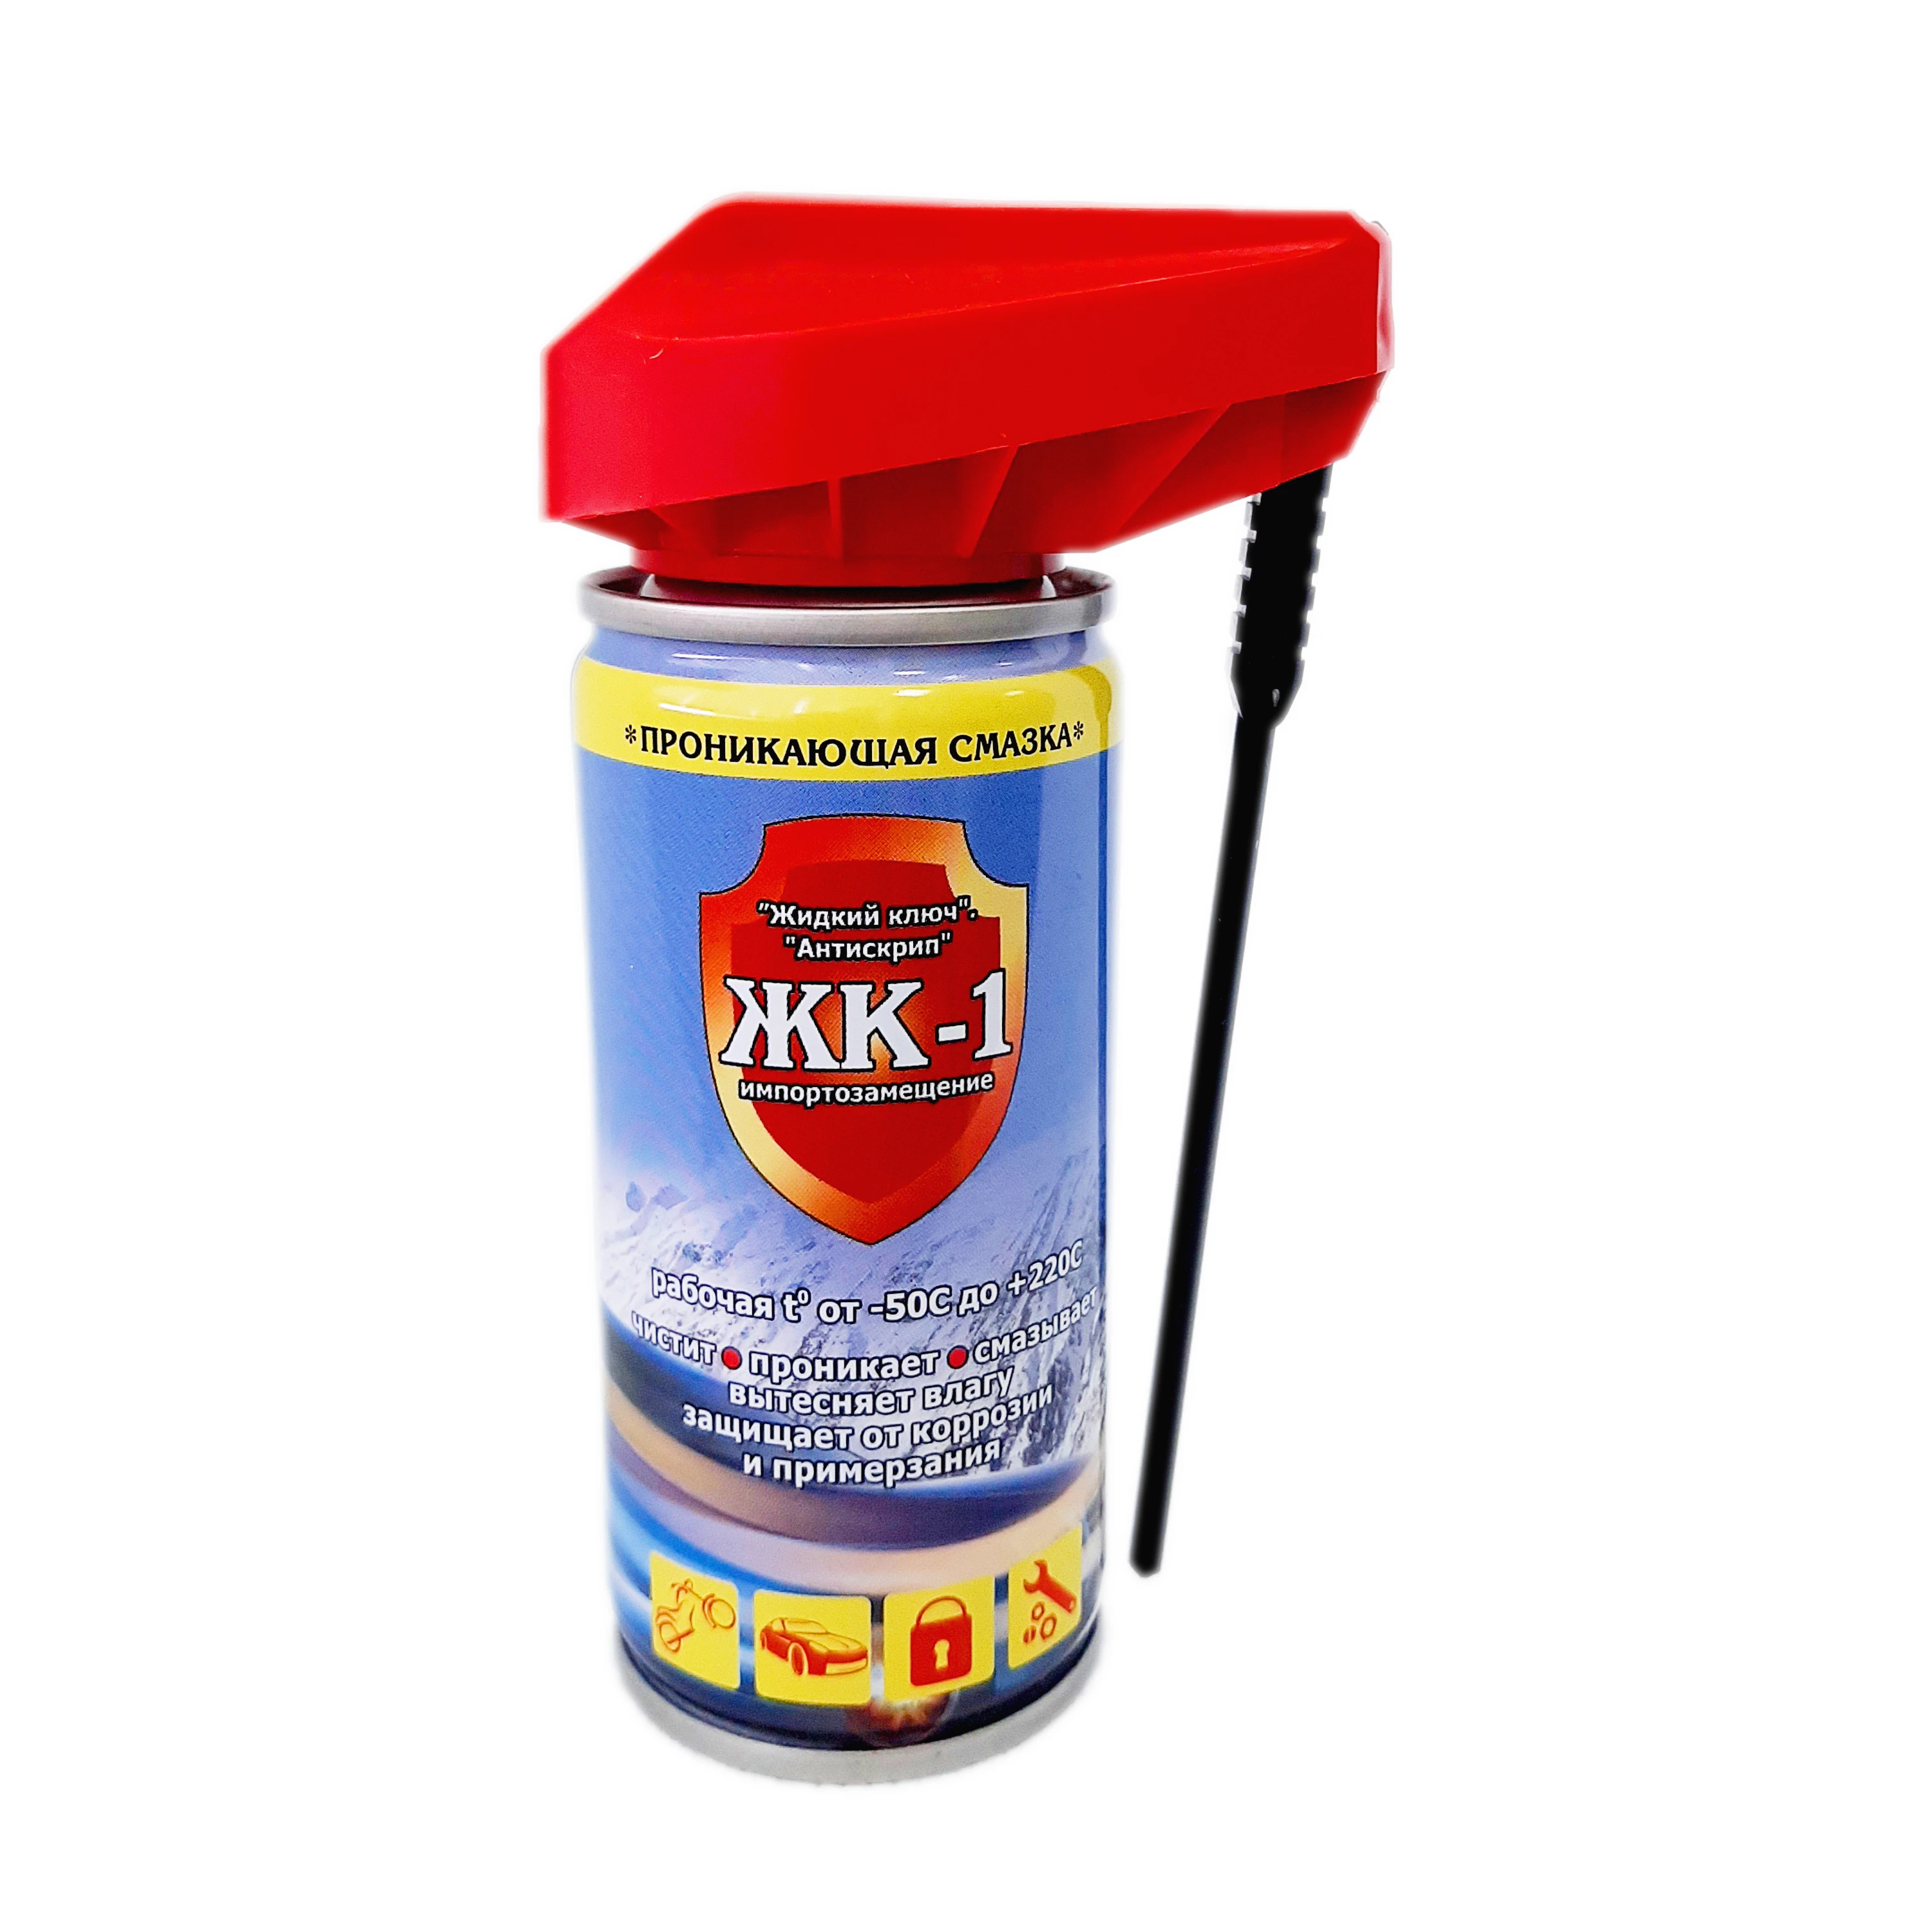 LK-1 liquid key 140 ml AT anti-creak water-dispersion penetrating lubricant